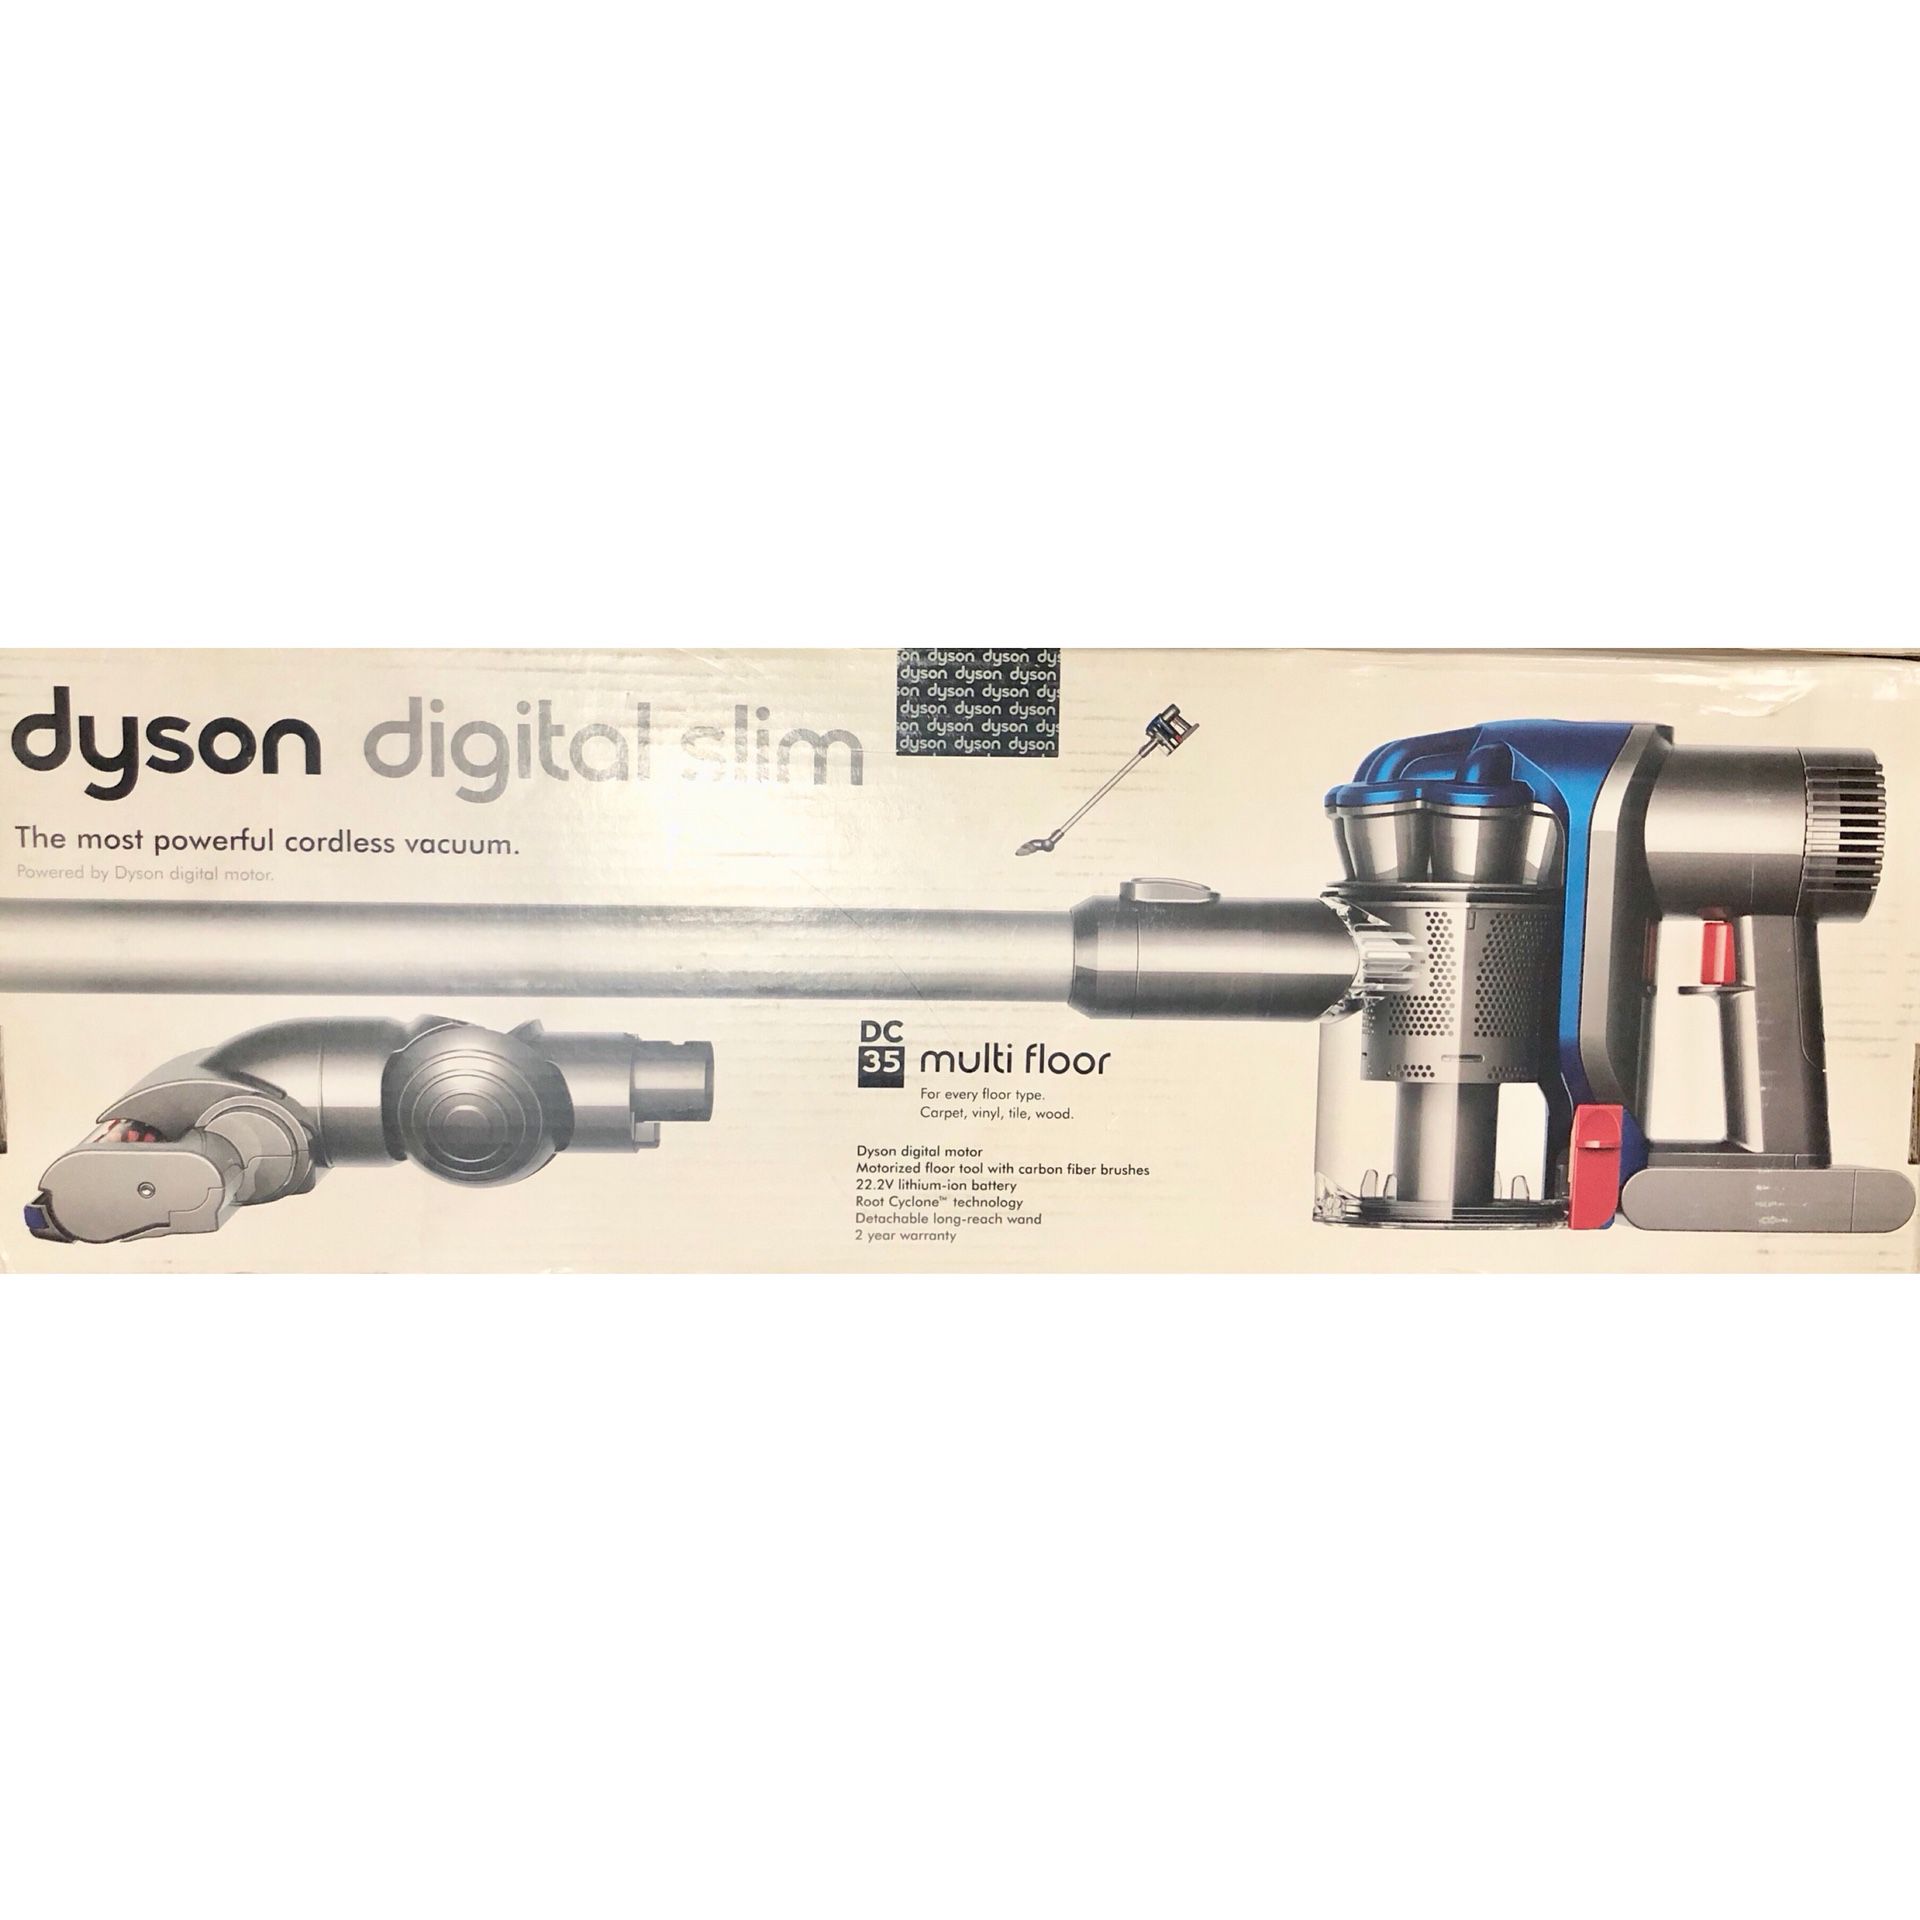 Dyson DC35 Digital Slim Cordless Vacuum